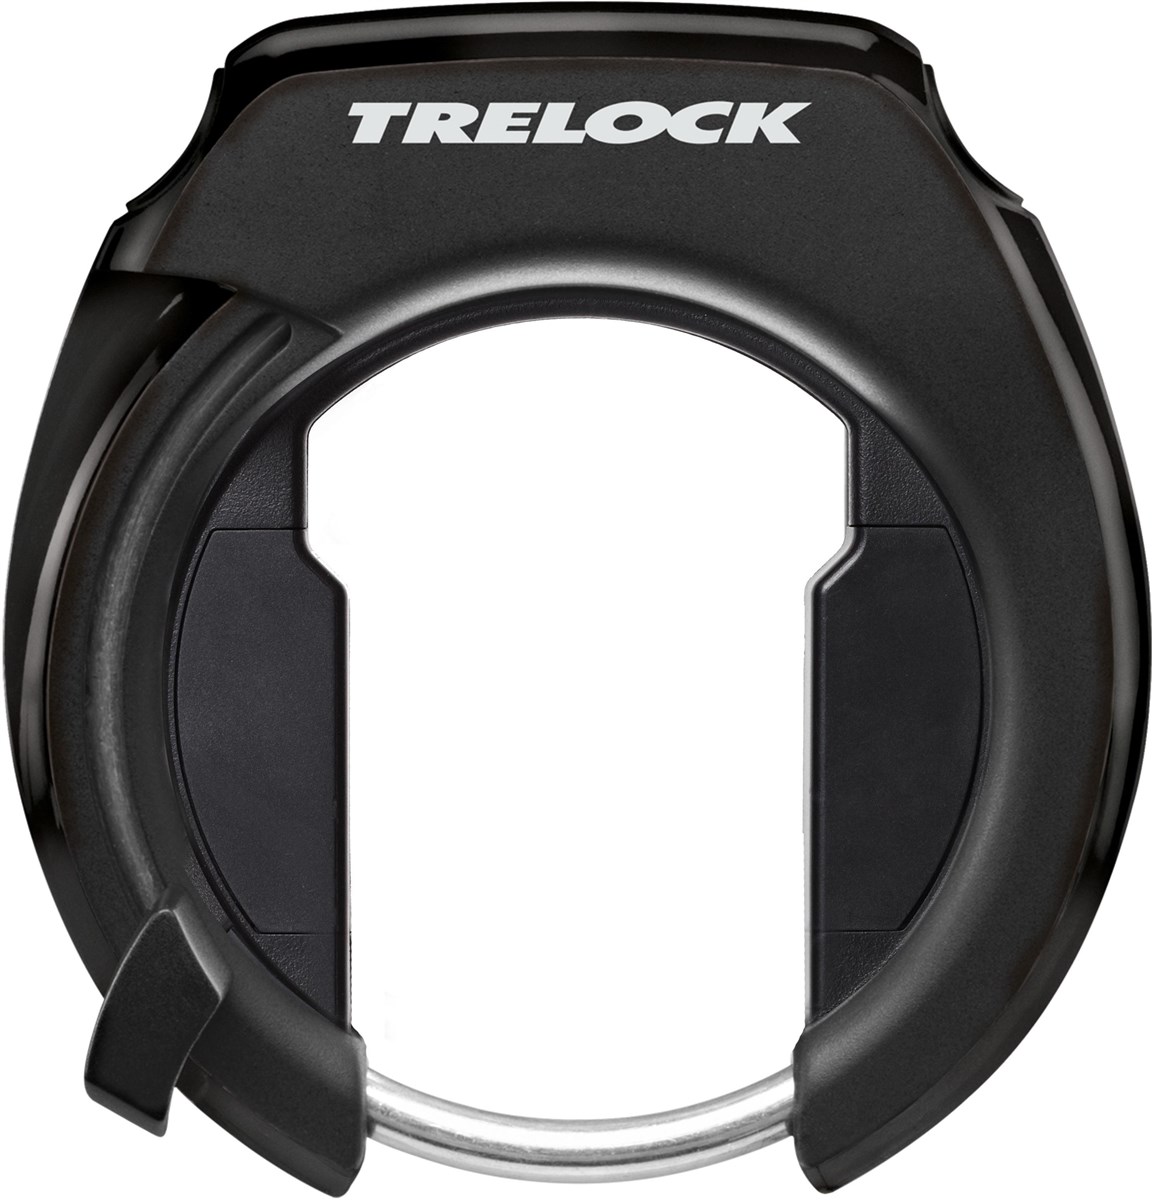 Tre-Lock Ring Lock RS351 P-O-C product image